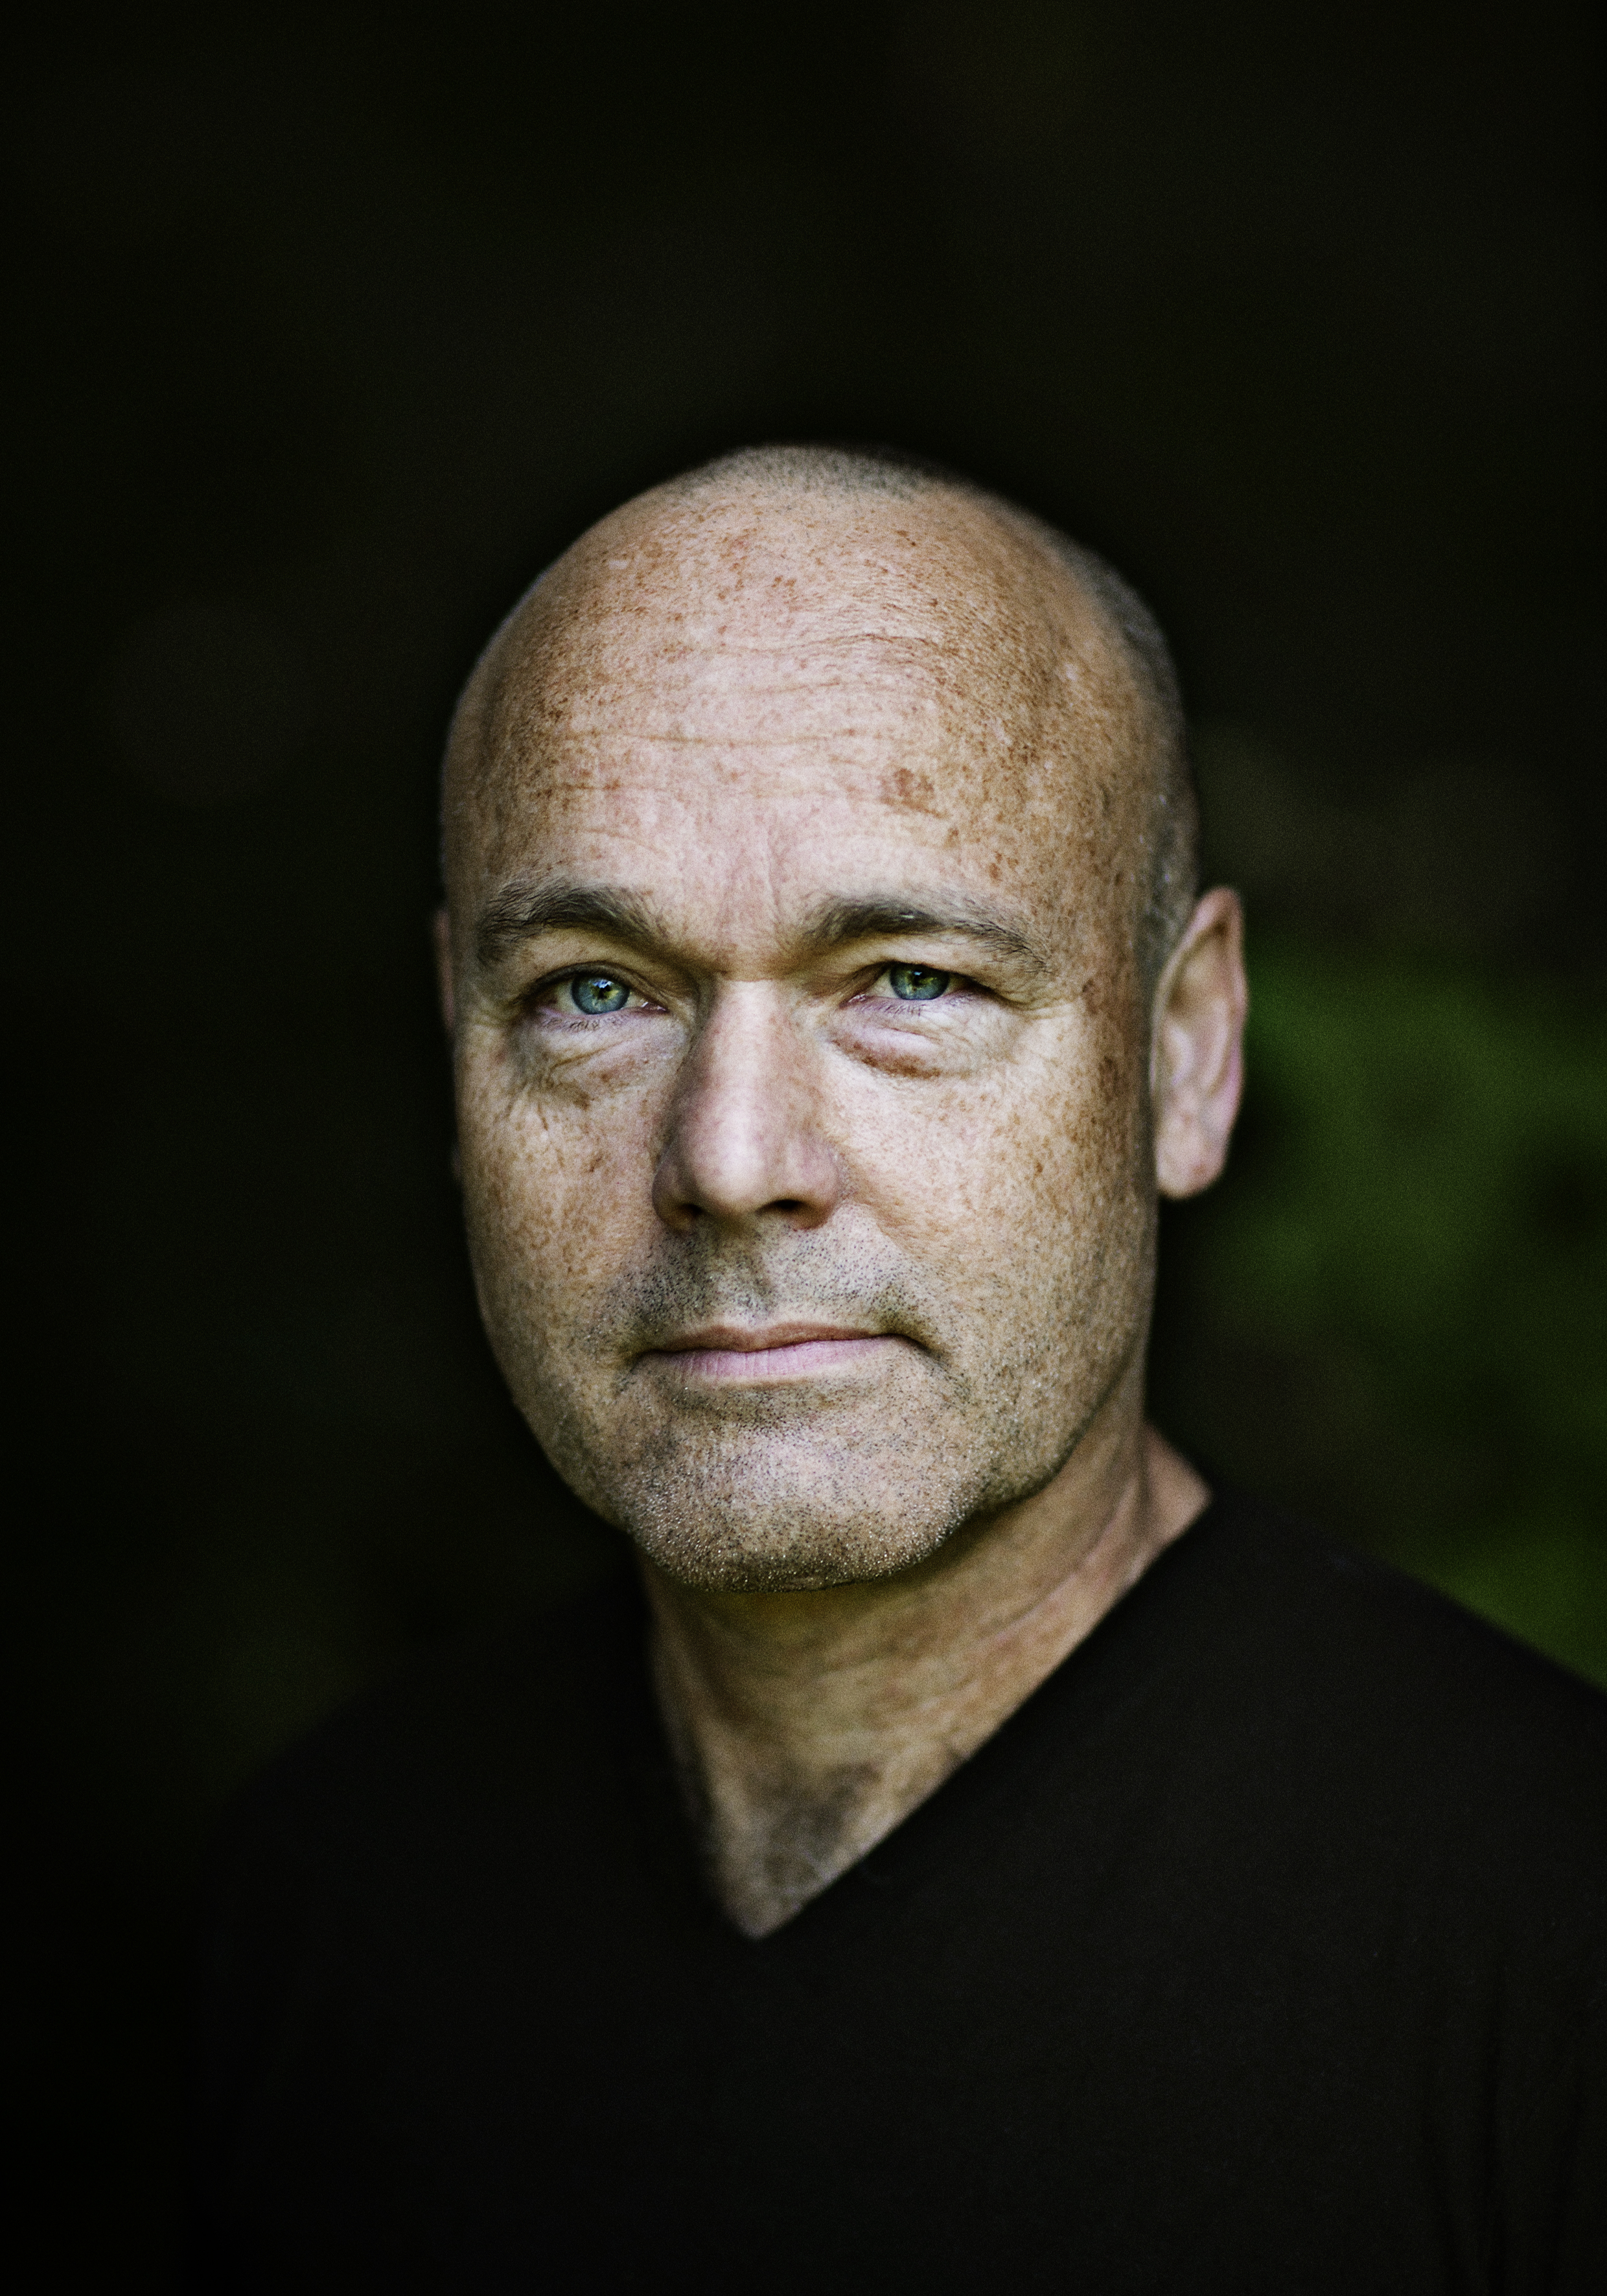 Peter Øvig Knudsen